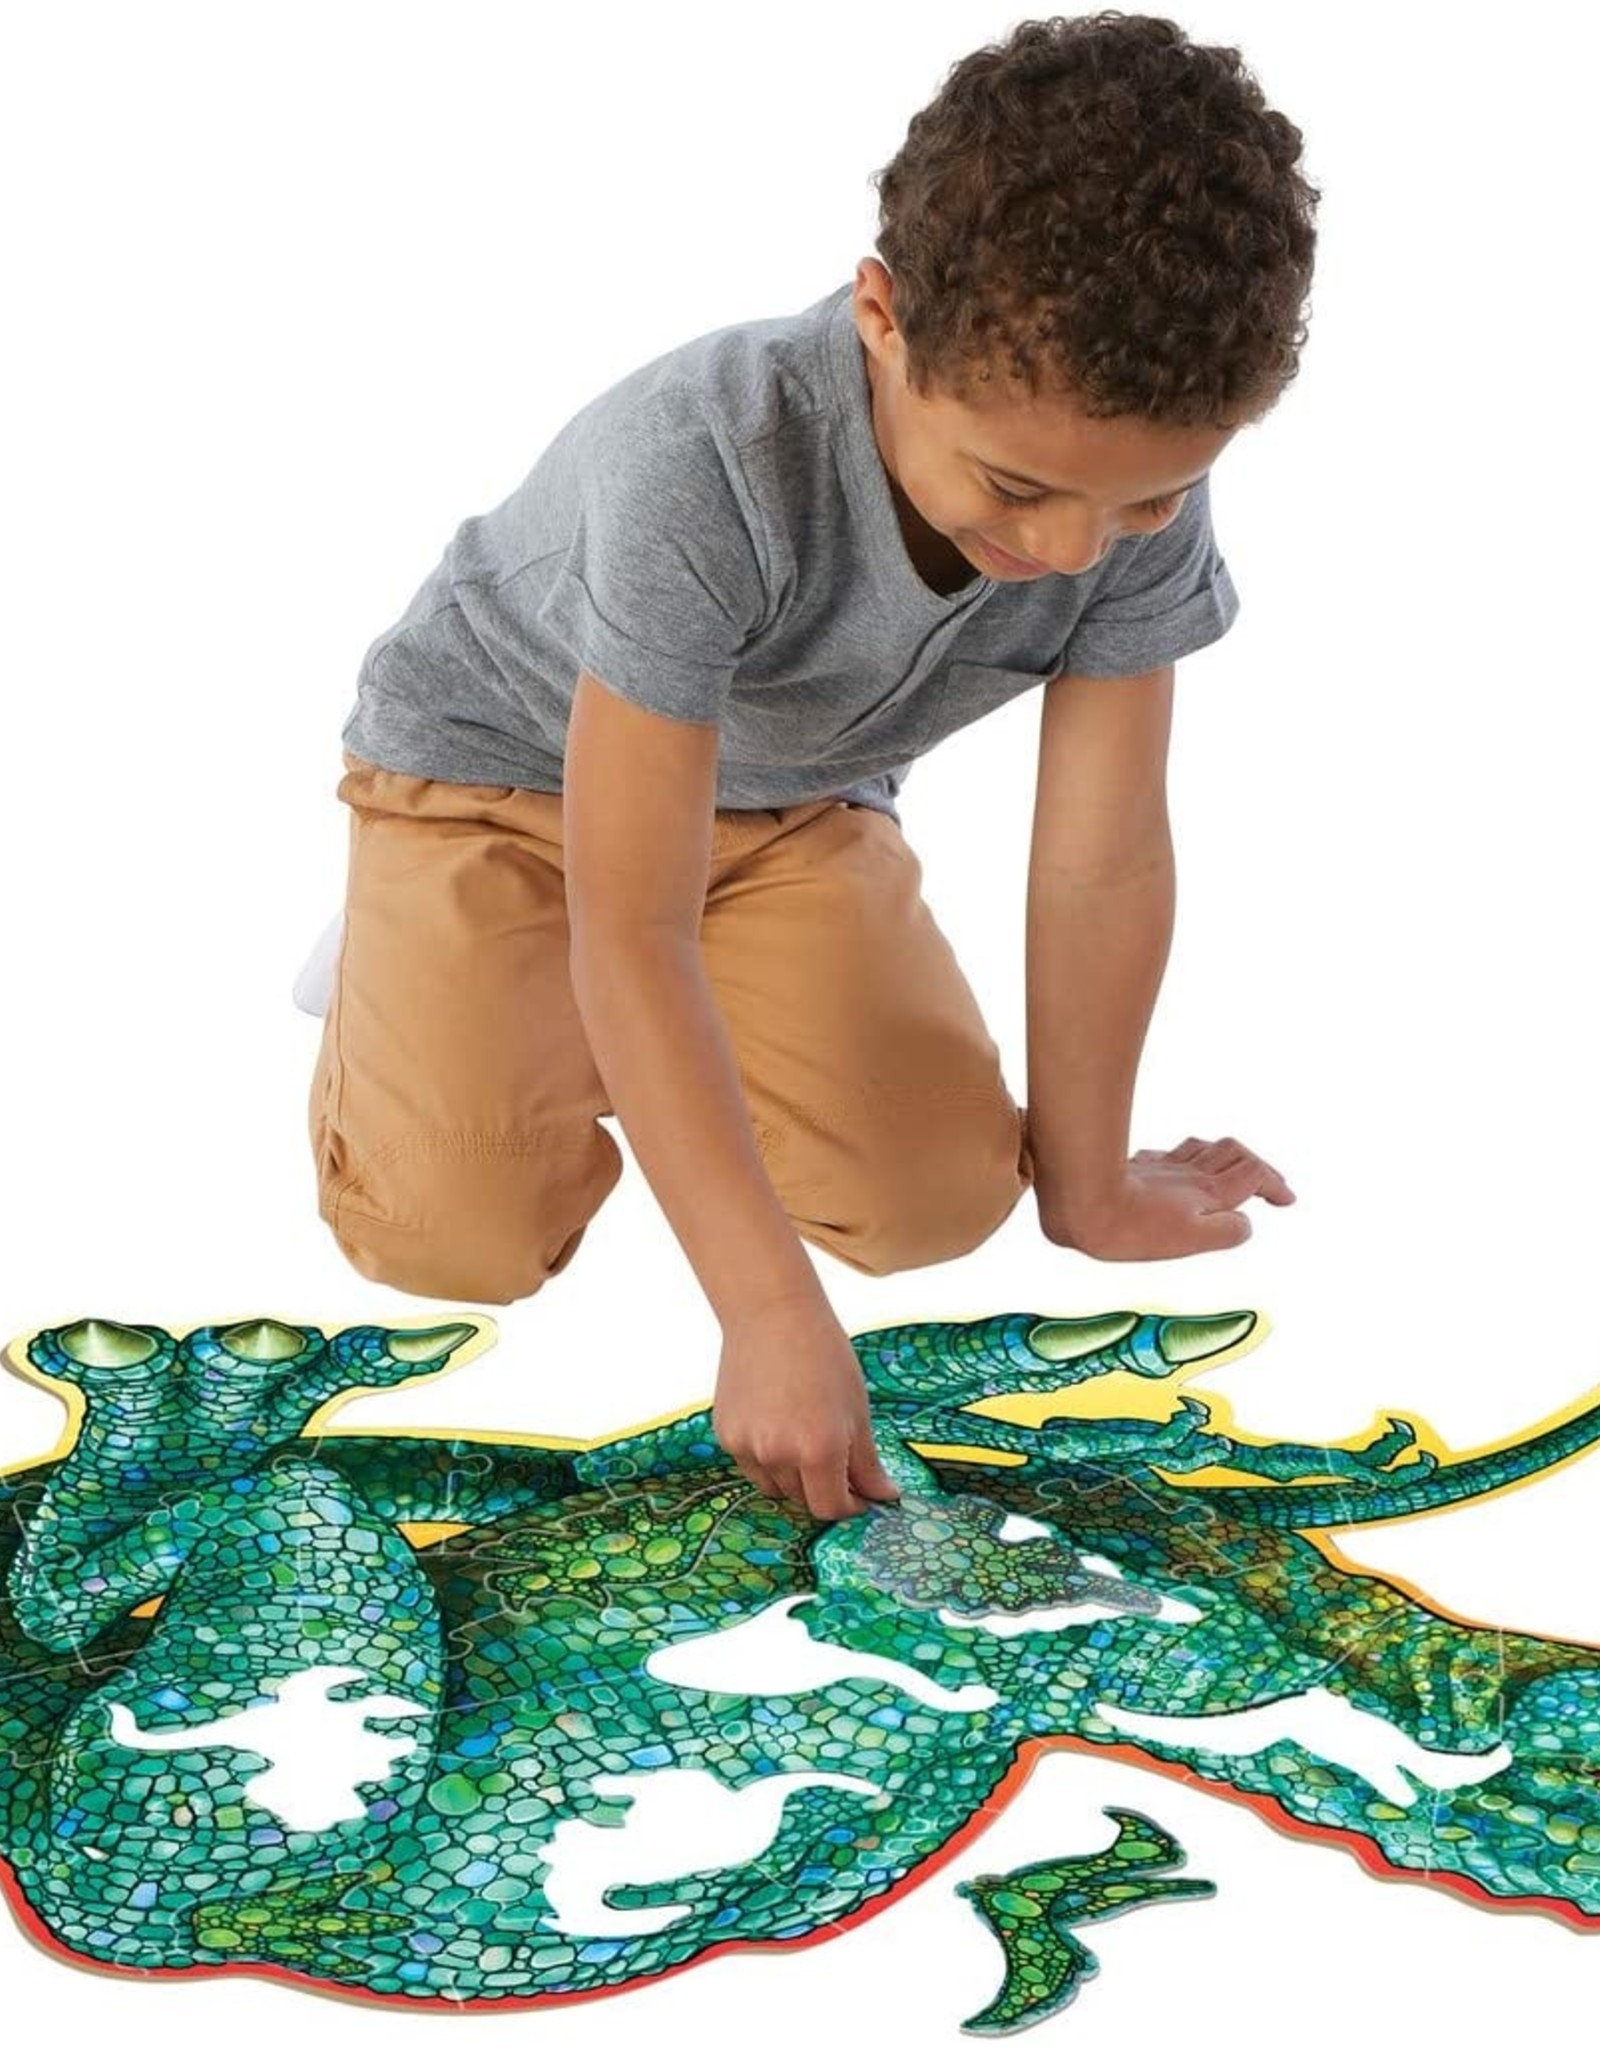 Peaceable Kingdom Shiny Dinosaur Floor Puzzle 39pc